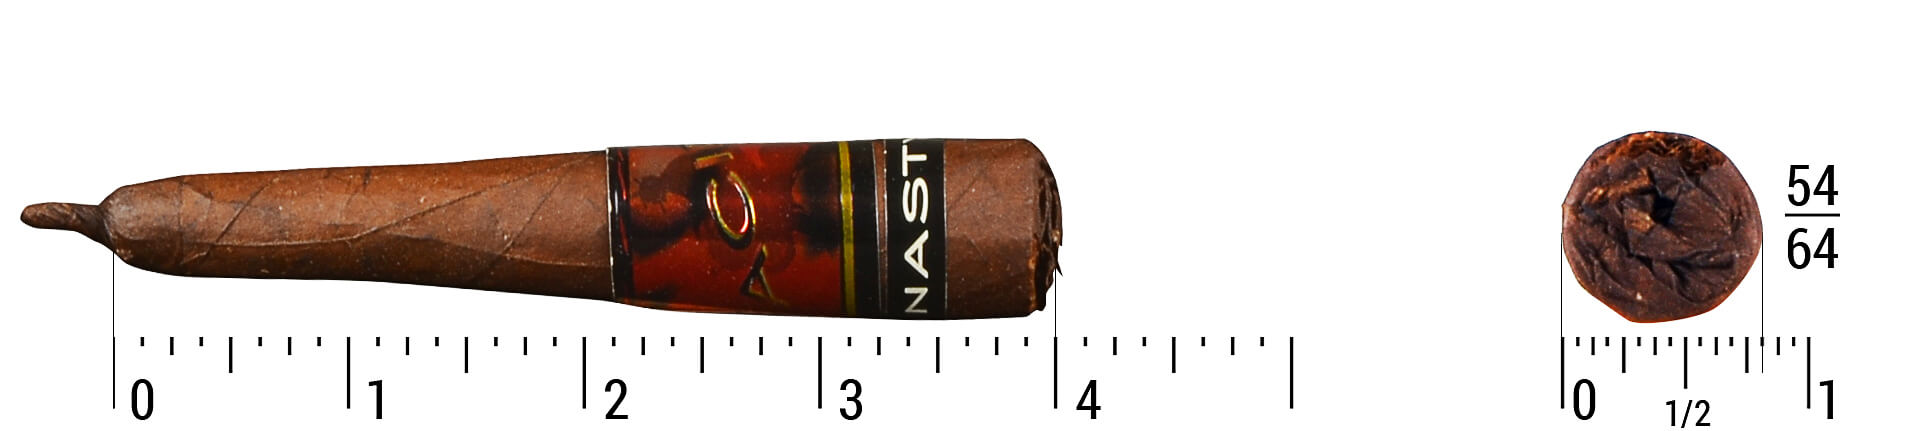 Acid Nasty Single Cigar Size